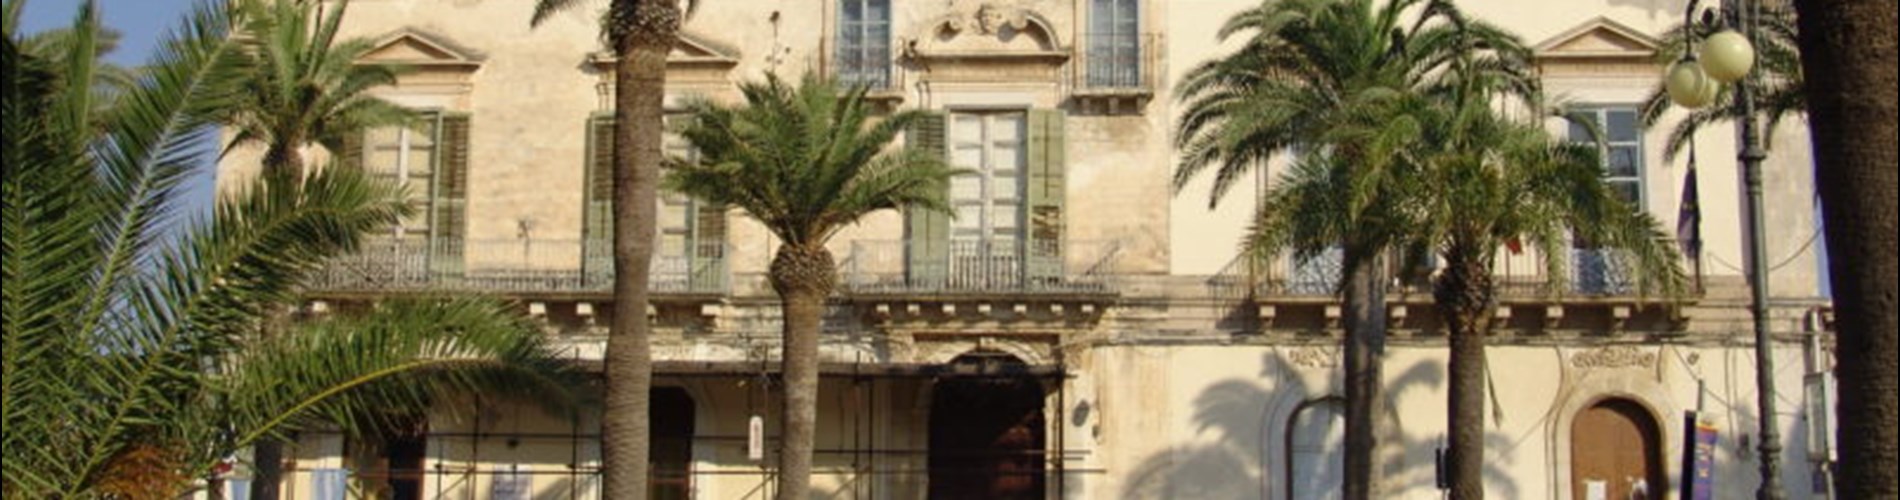 Palazzo Pandolfi